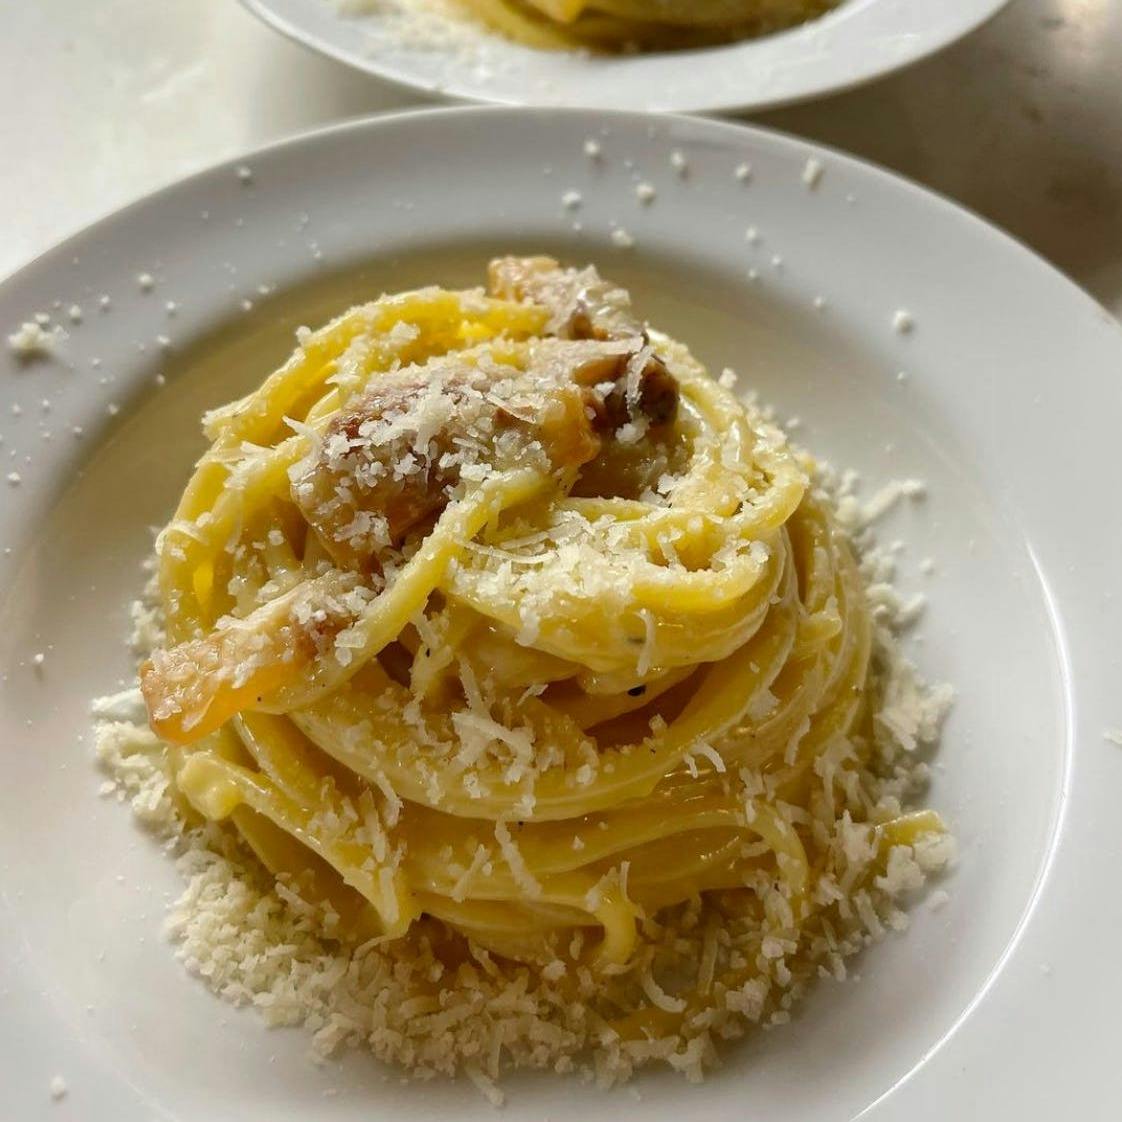 Spaghetti Carbonara on a white plate